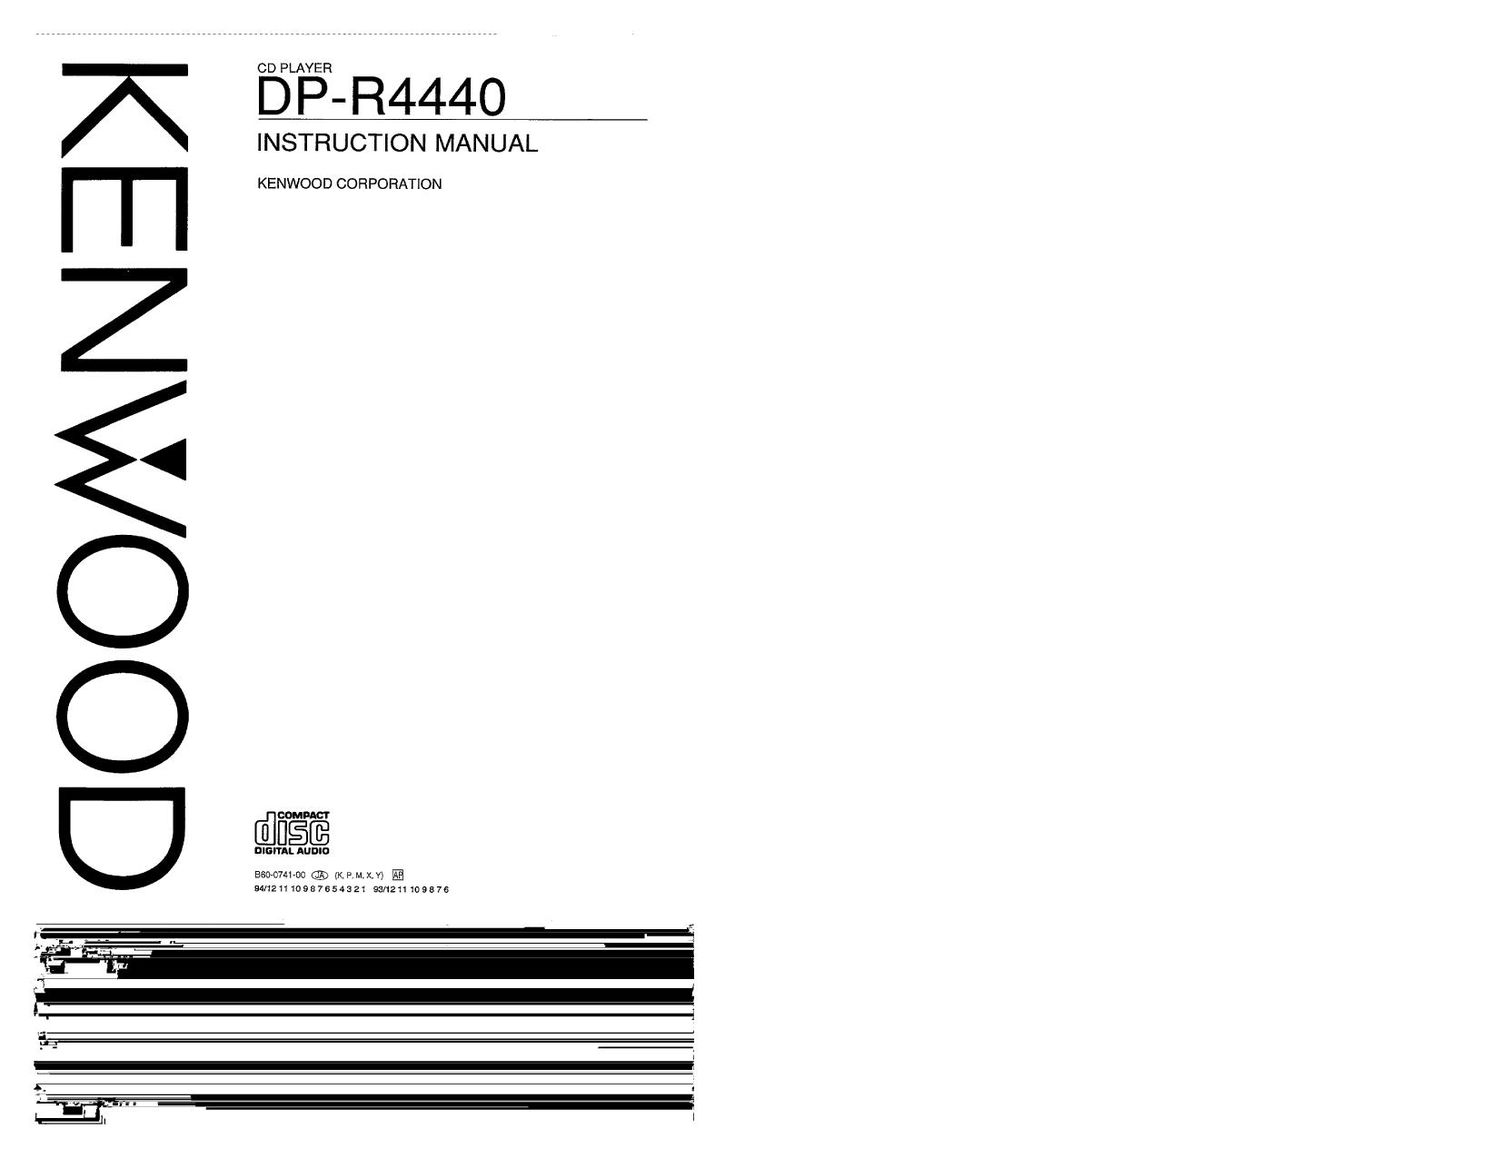 Kenwood DPR 4440 Owners Manual